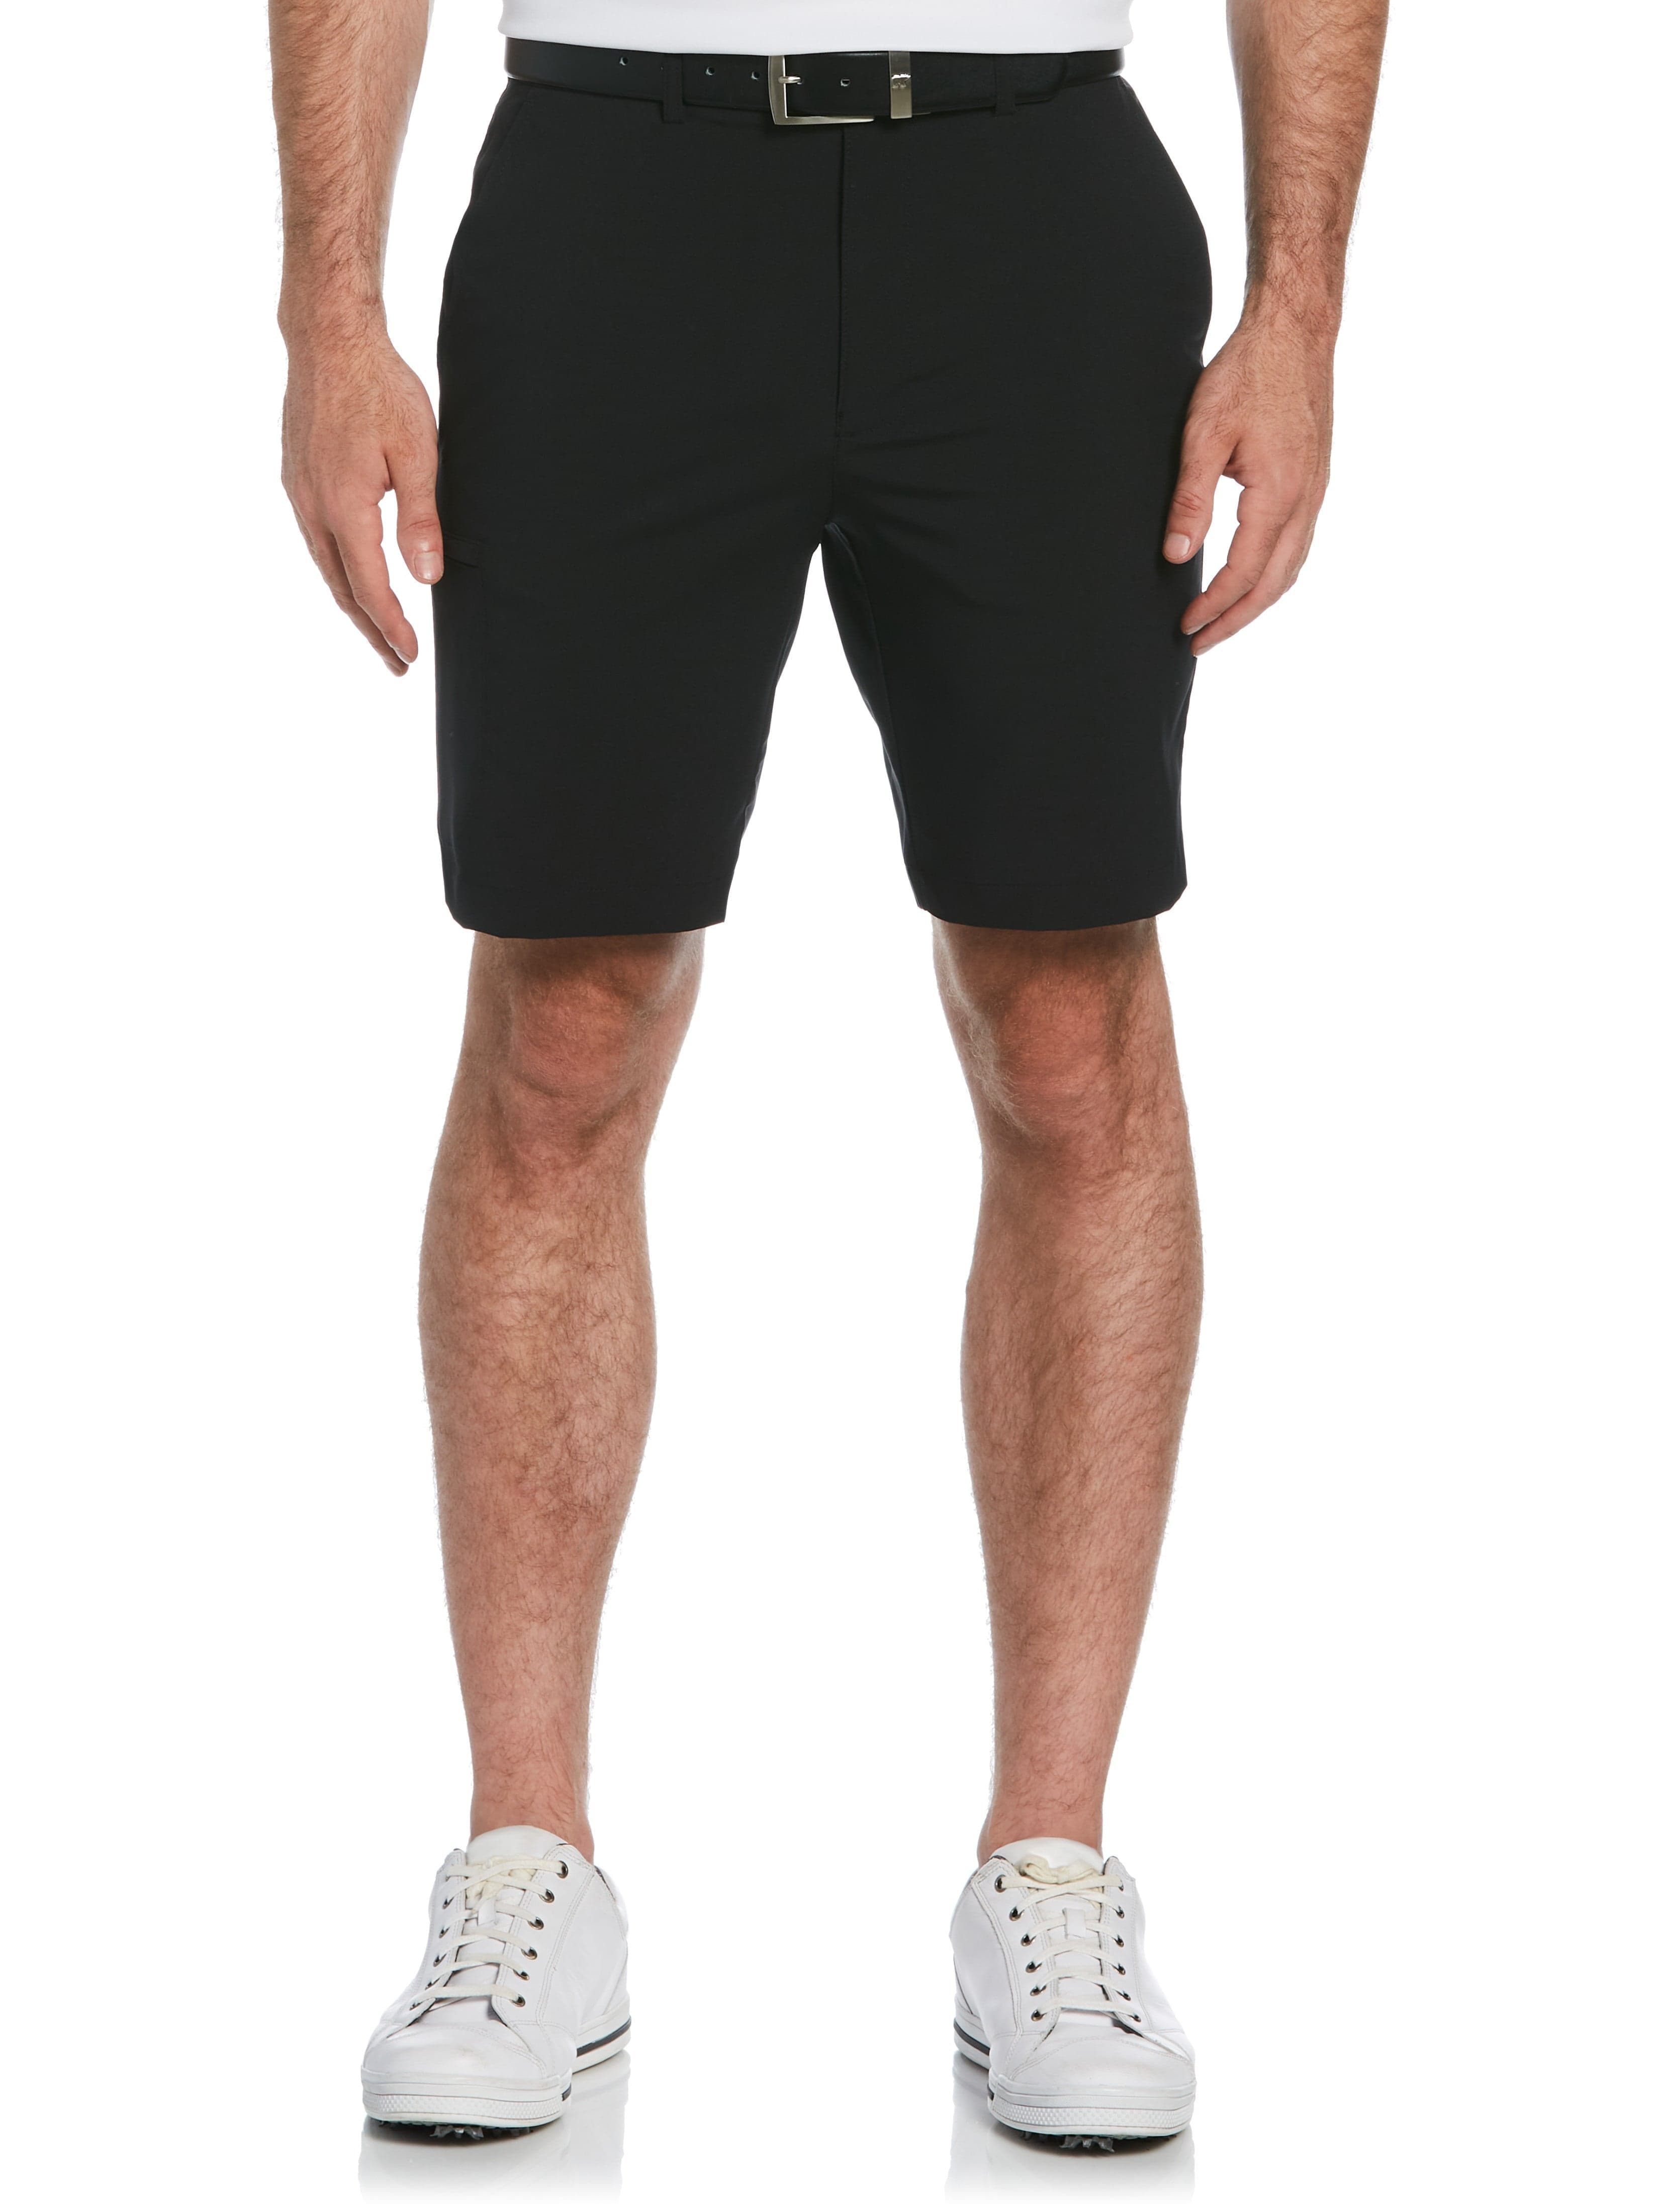 Jack Nicklaus Mens Flat Front Solid Golf Shorts w/ Cargo Pocket, Size 42, Black, 100% Polyester | Golf Apparel Shop